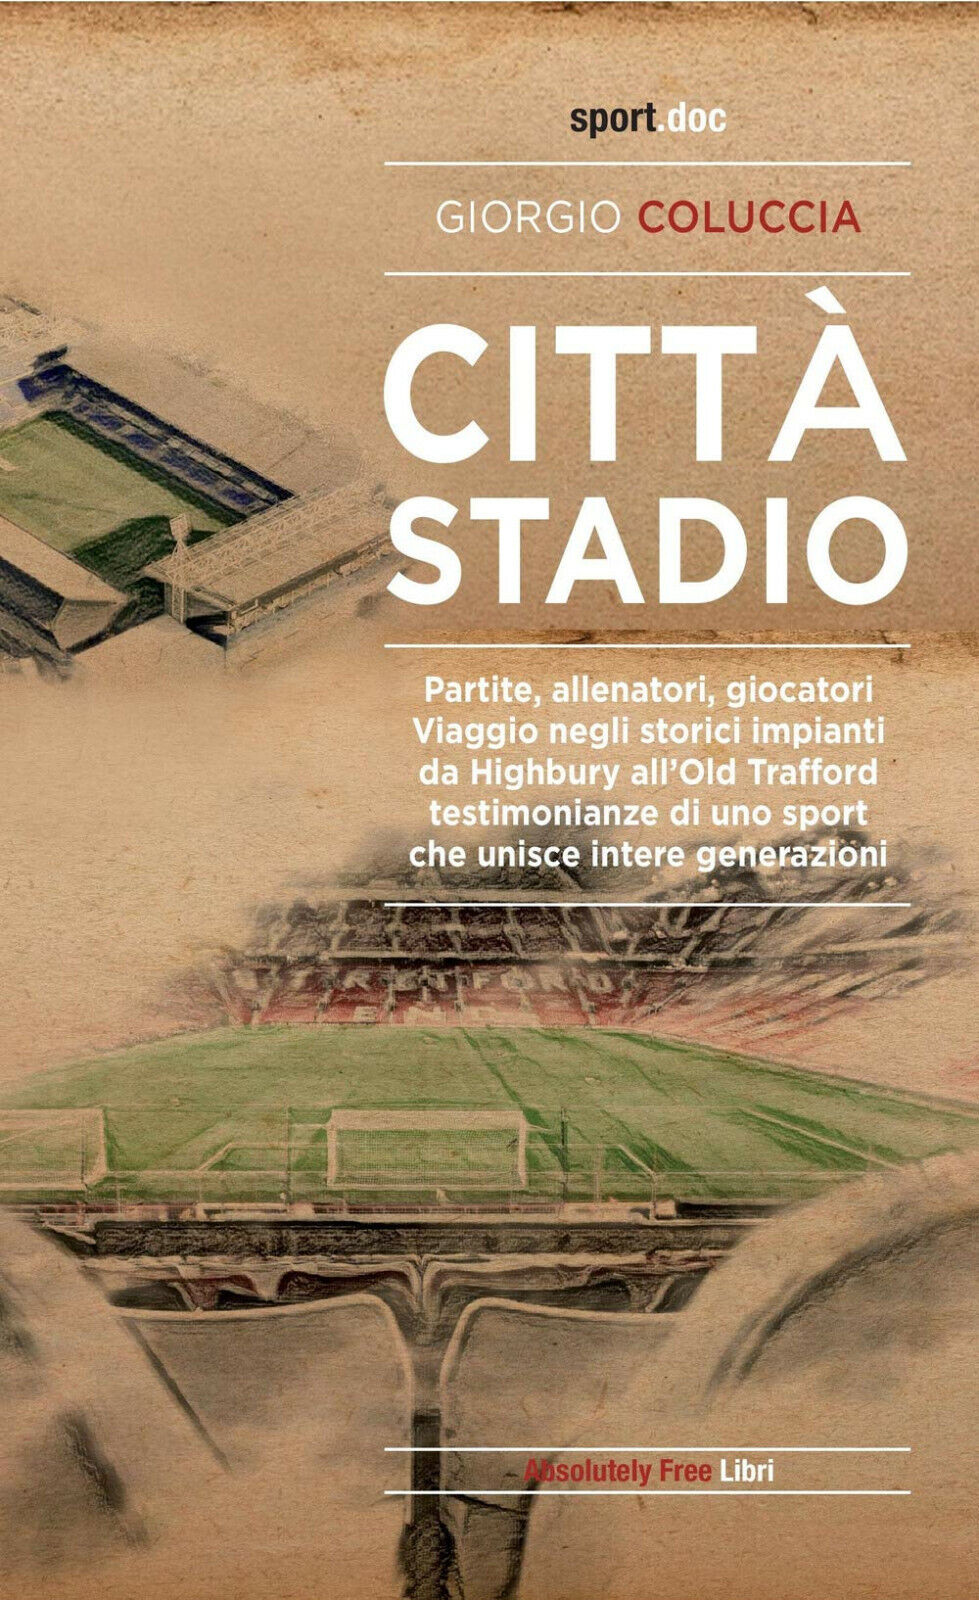 Citt? stadio - Giorgio Coluccia - Absolutely Free, 2020